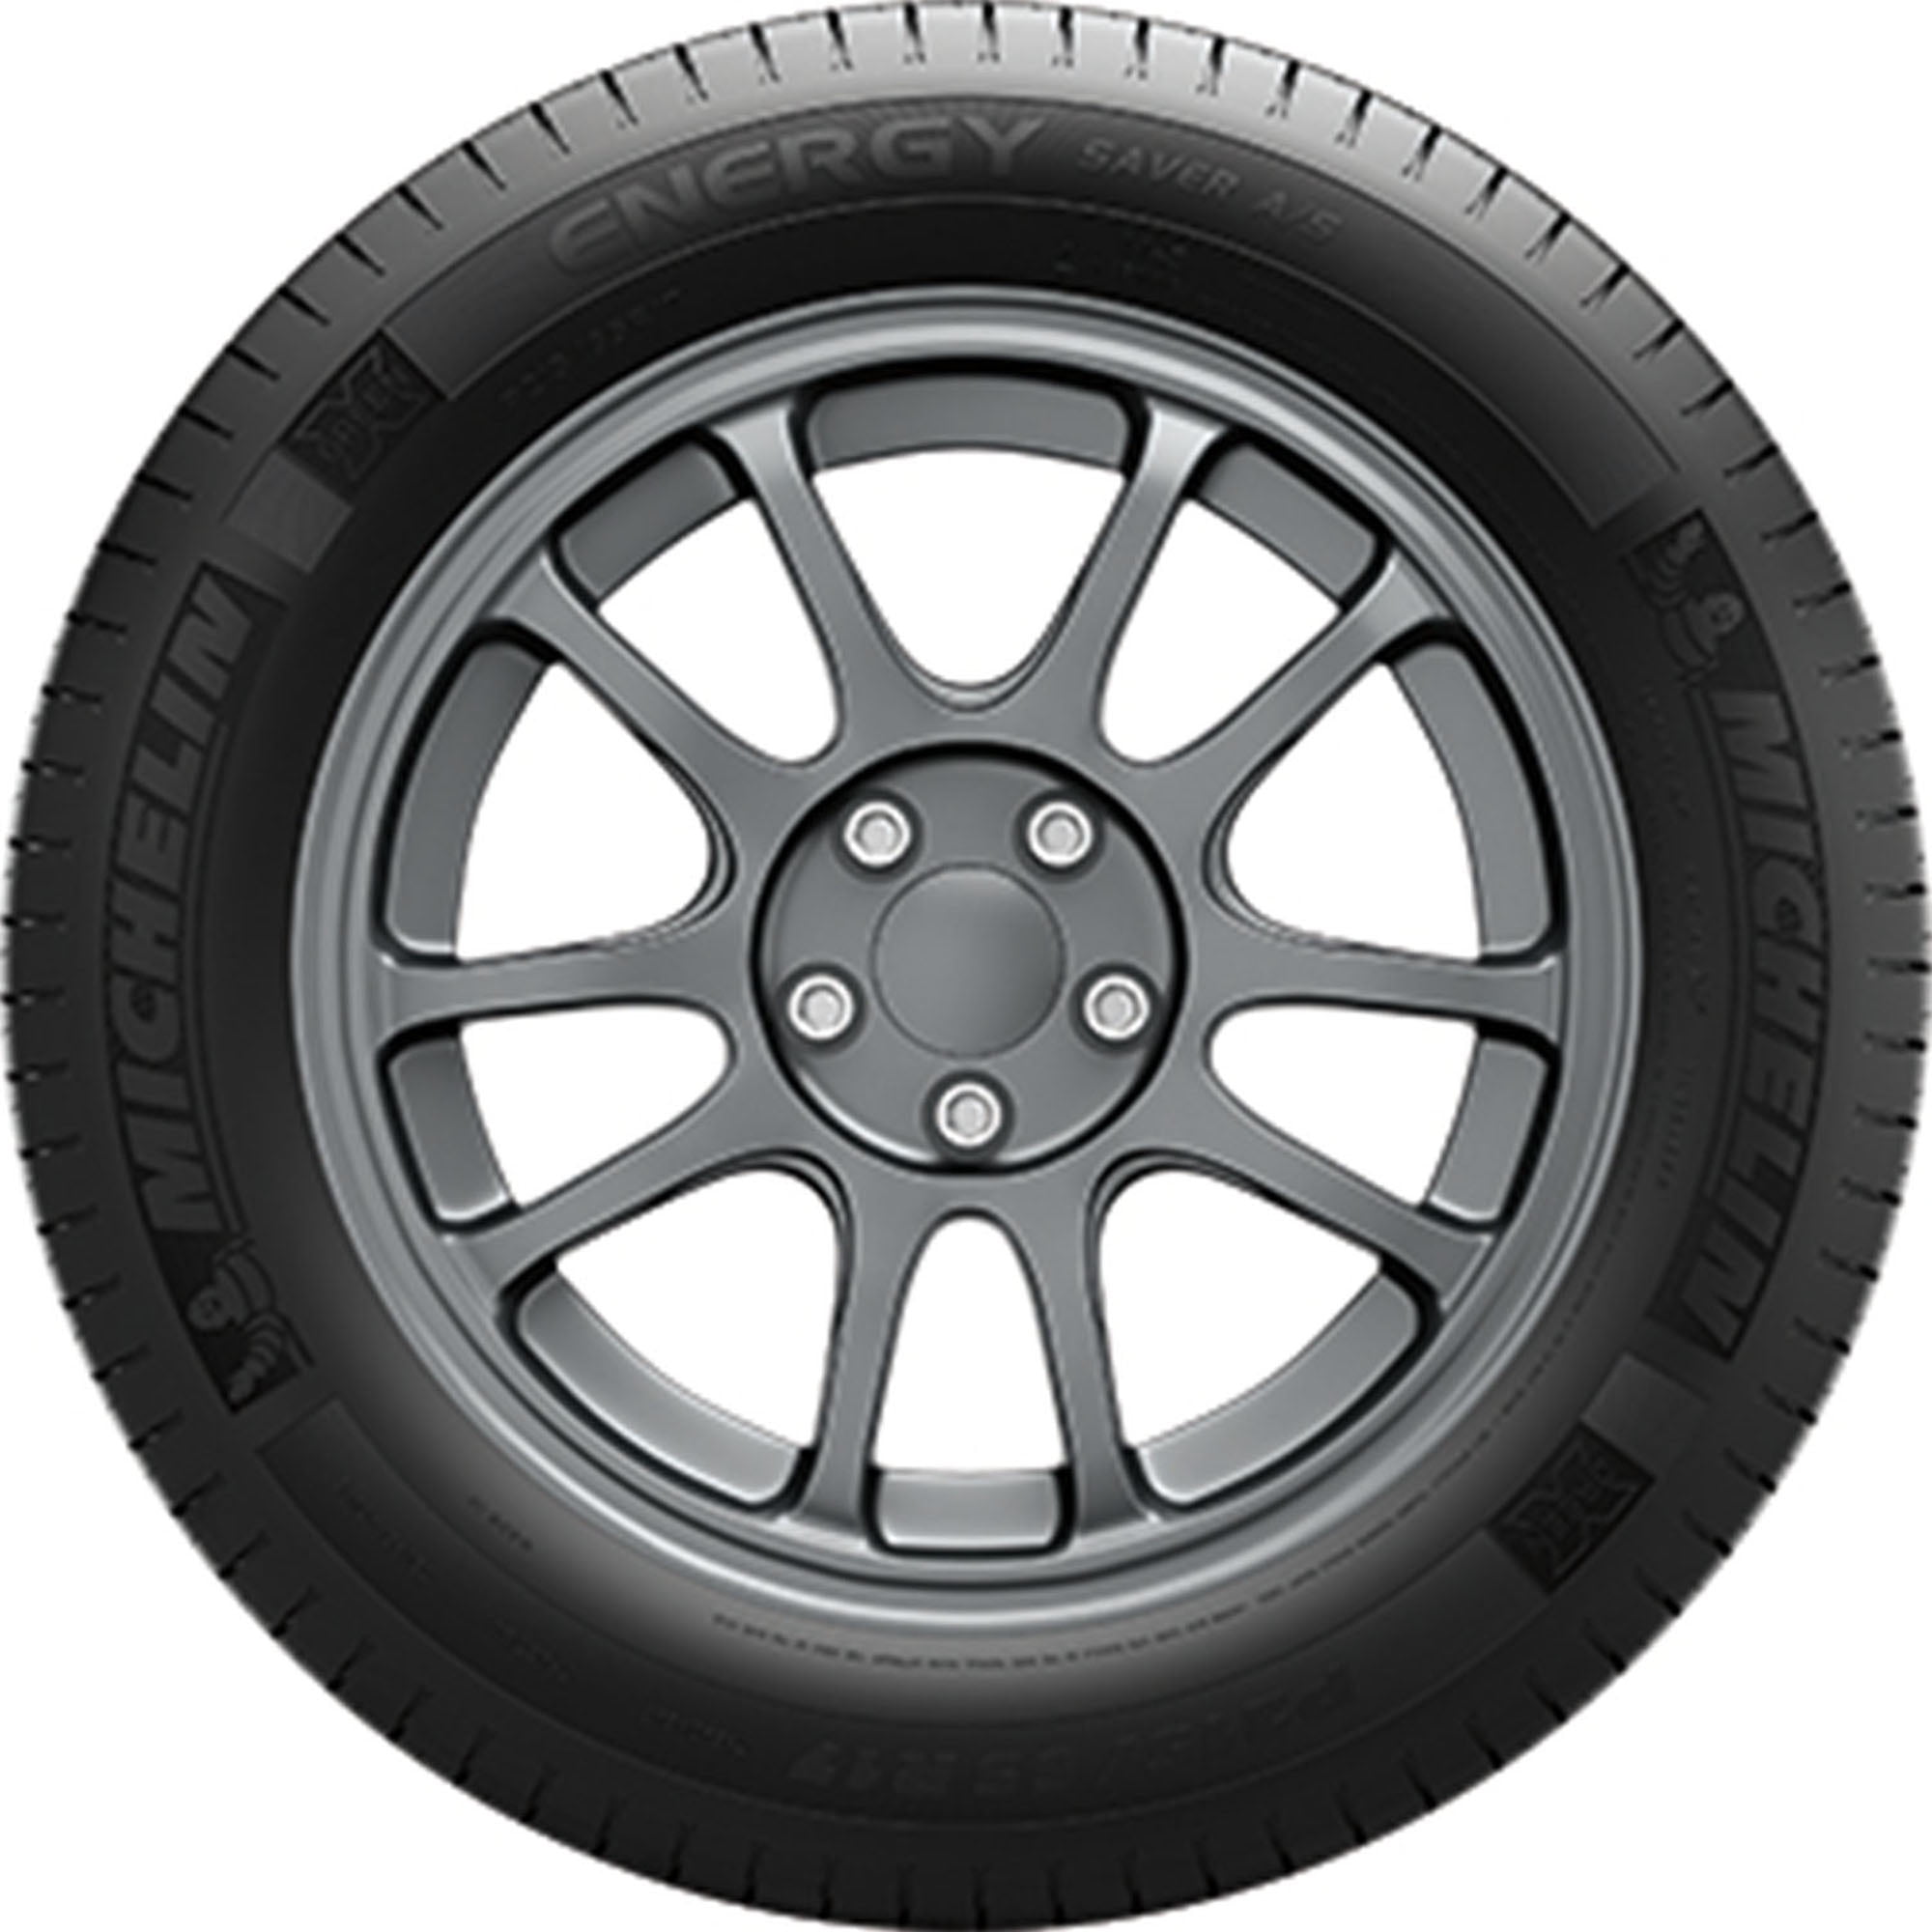 Michelin Energy Saver A/S All Season 205/55R16 91H Passenger Tire